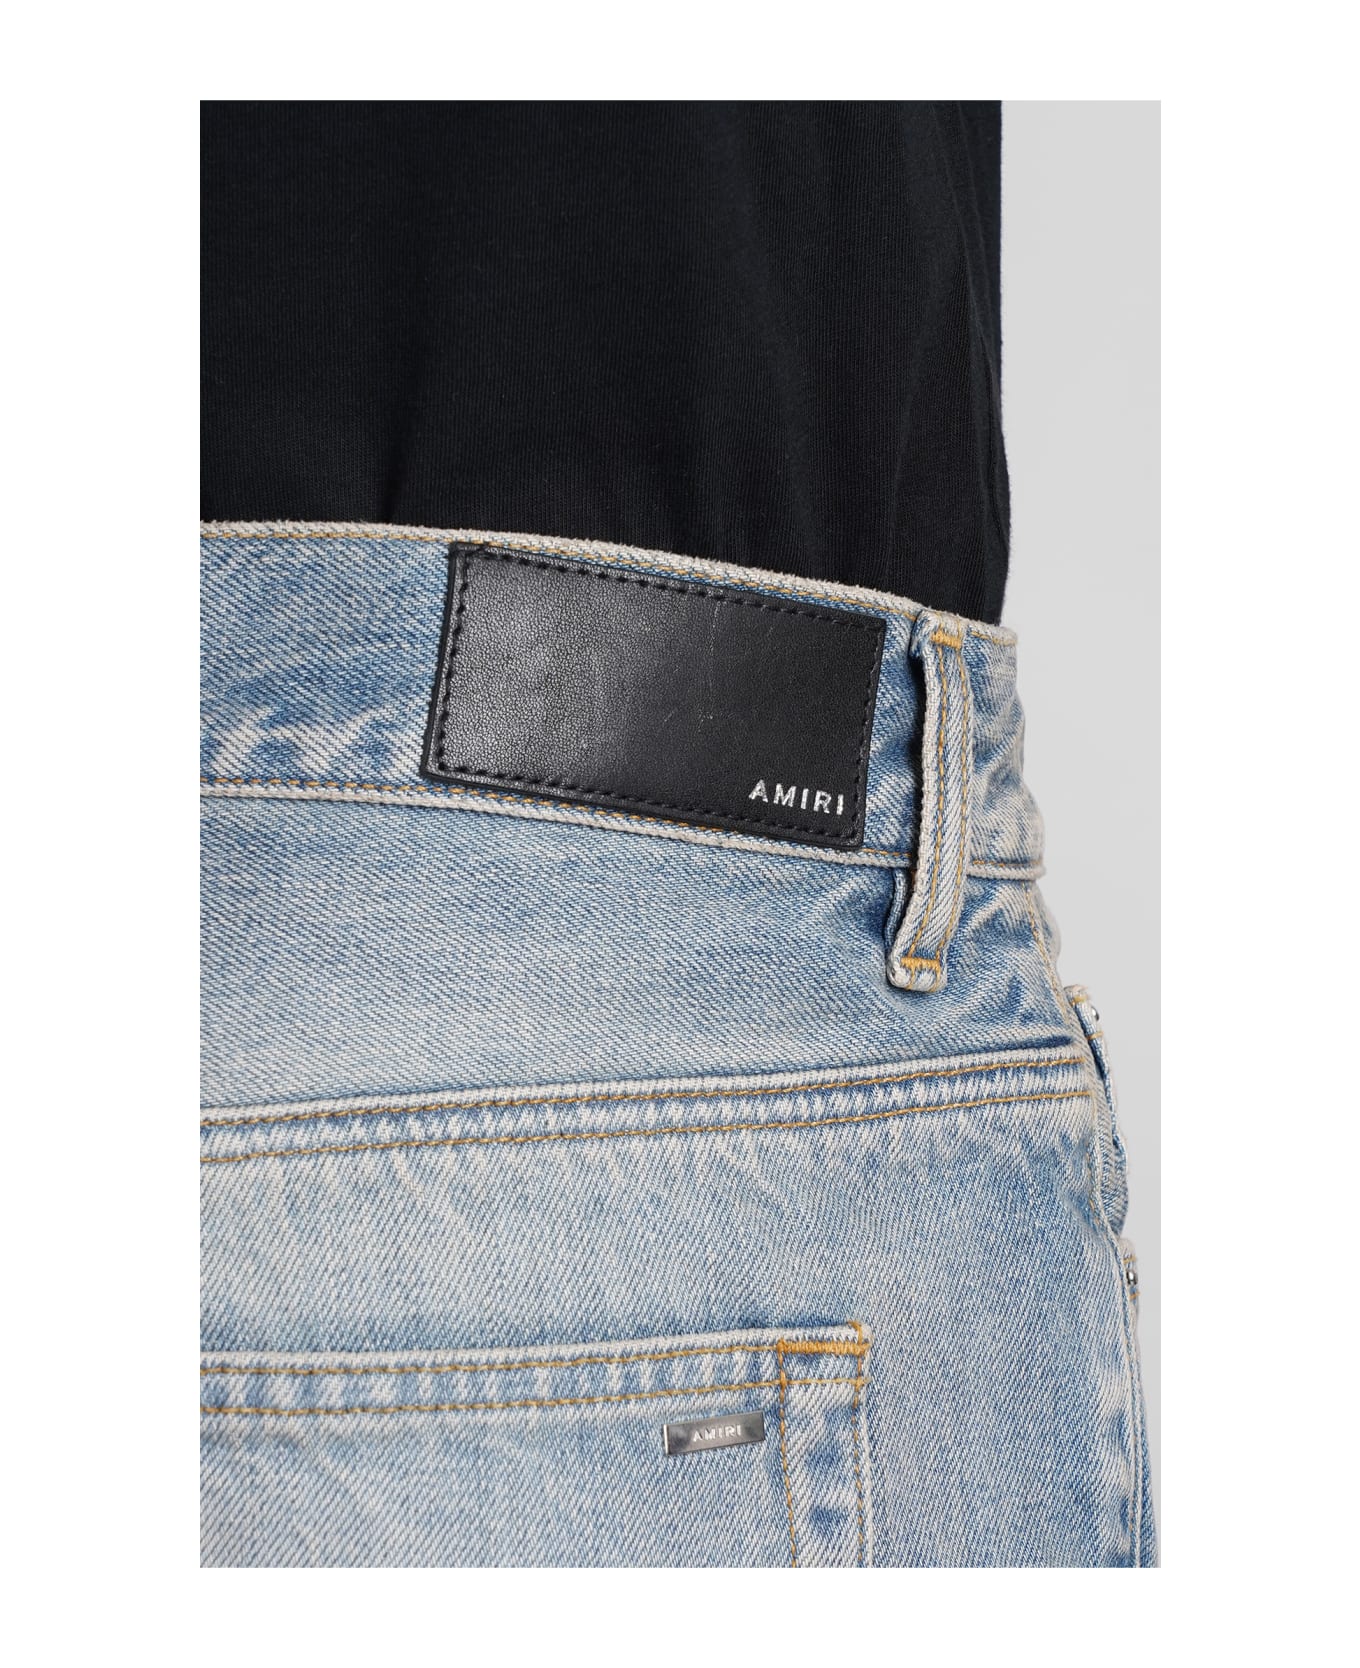 AMIRI Classic 5 Pockets Jeans - blue